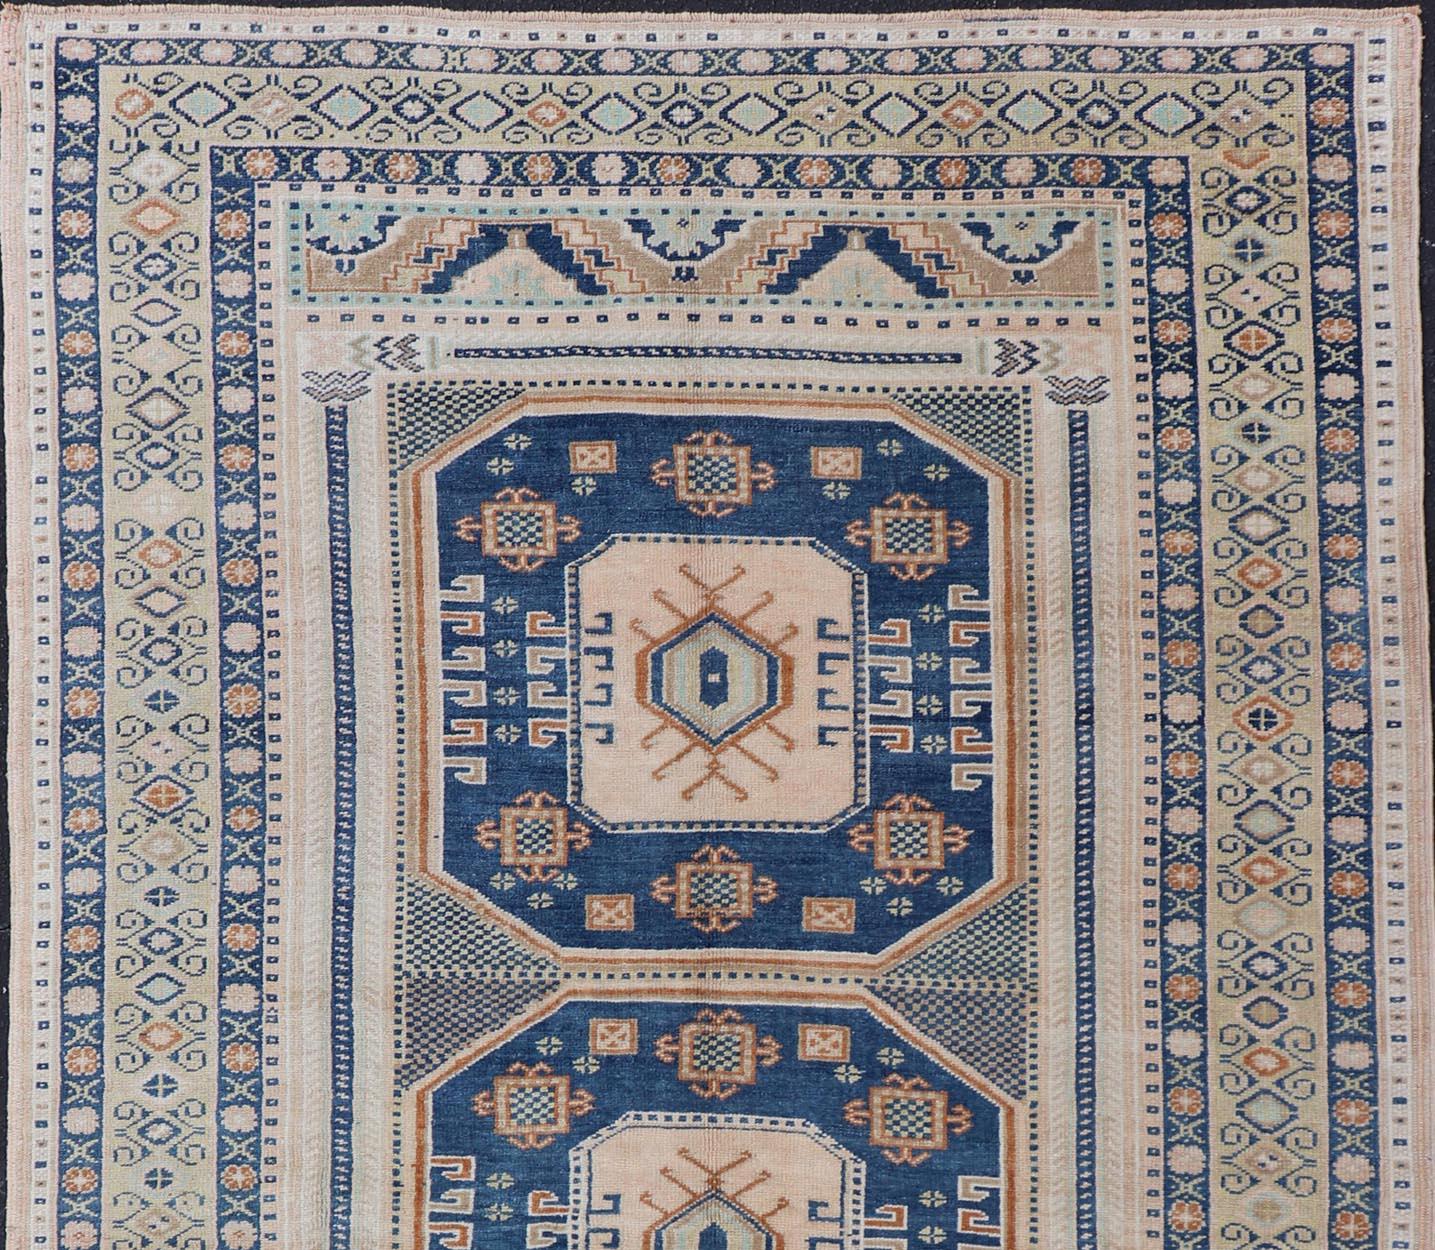 Vintage Hand Knotted Turkish Oushak carpet with medallion design in cream, blue, and green. Keivan Woven Arts / rug TU-MTU-171, country of origin / type: Turkey / Oushak, circa 1940

Measures: 5'5 x 10'1.